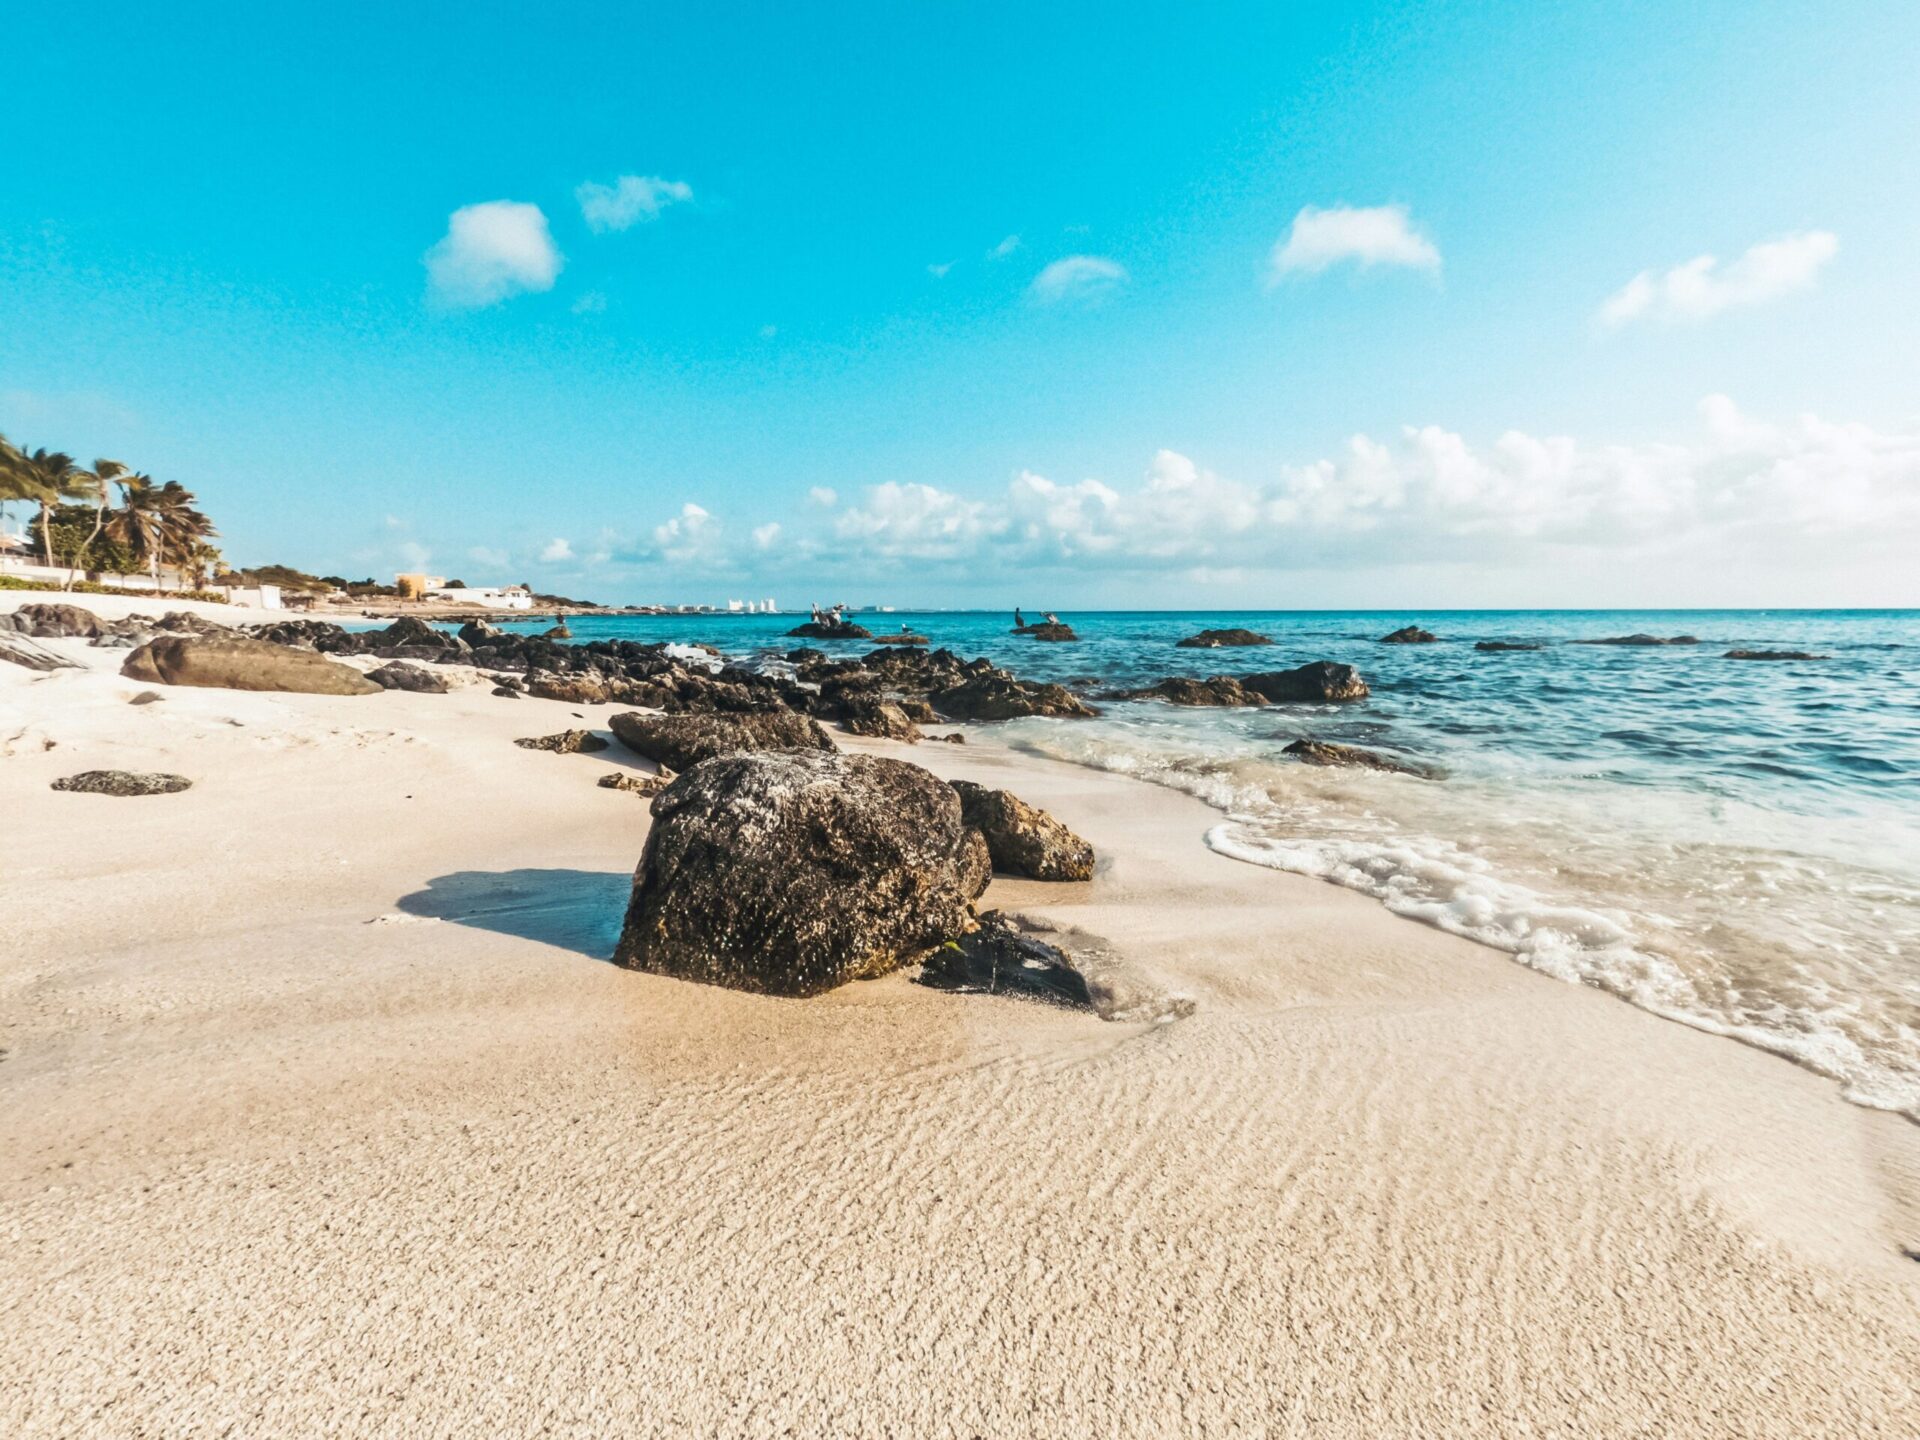 The blue skies and sandy beach of Aruba 